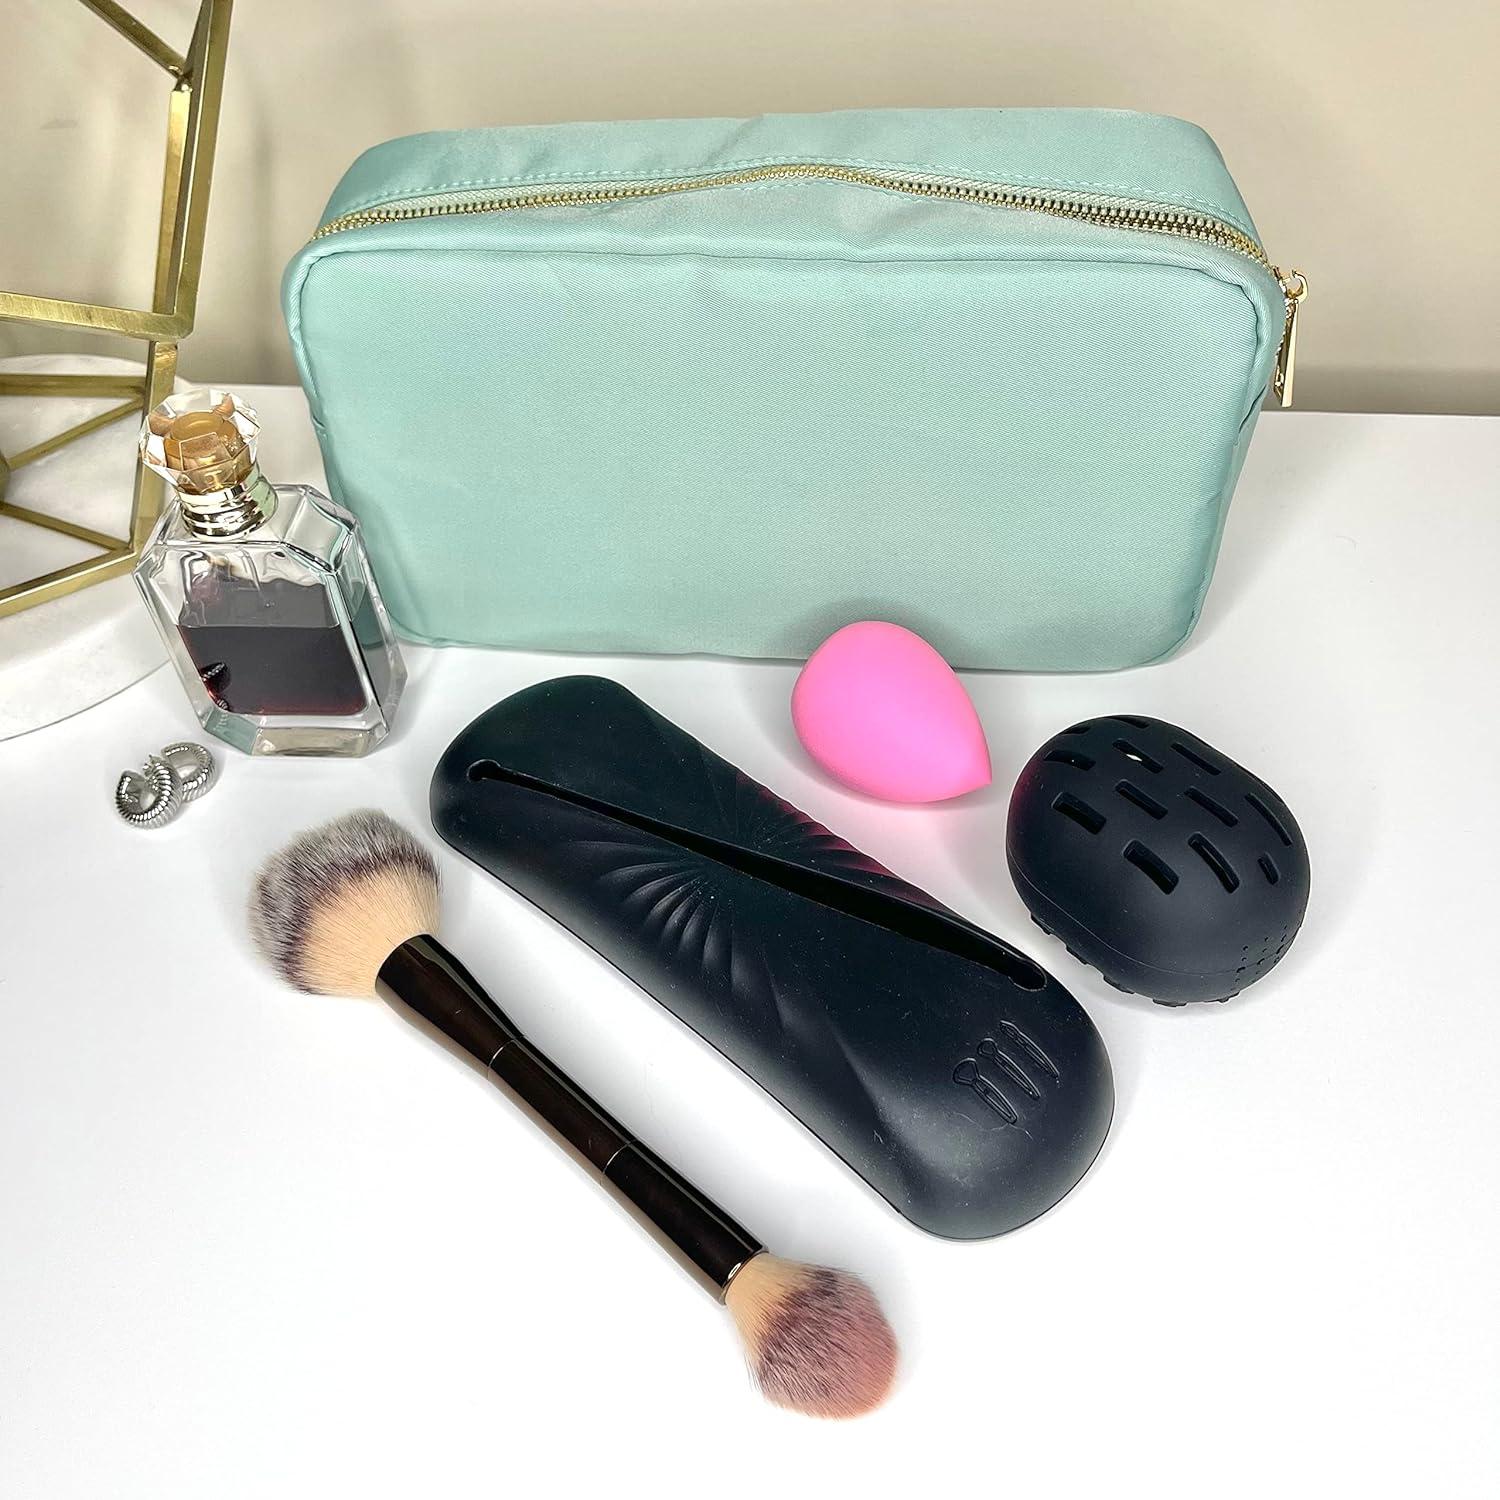 Silicone Makeup Brush Holder Case, Full Sized & Larger Brushes Fit